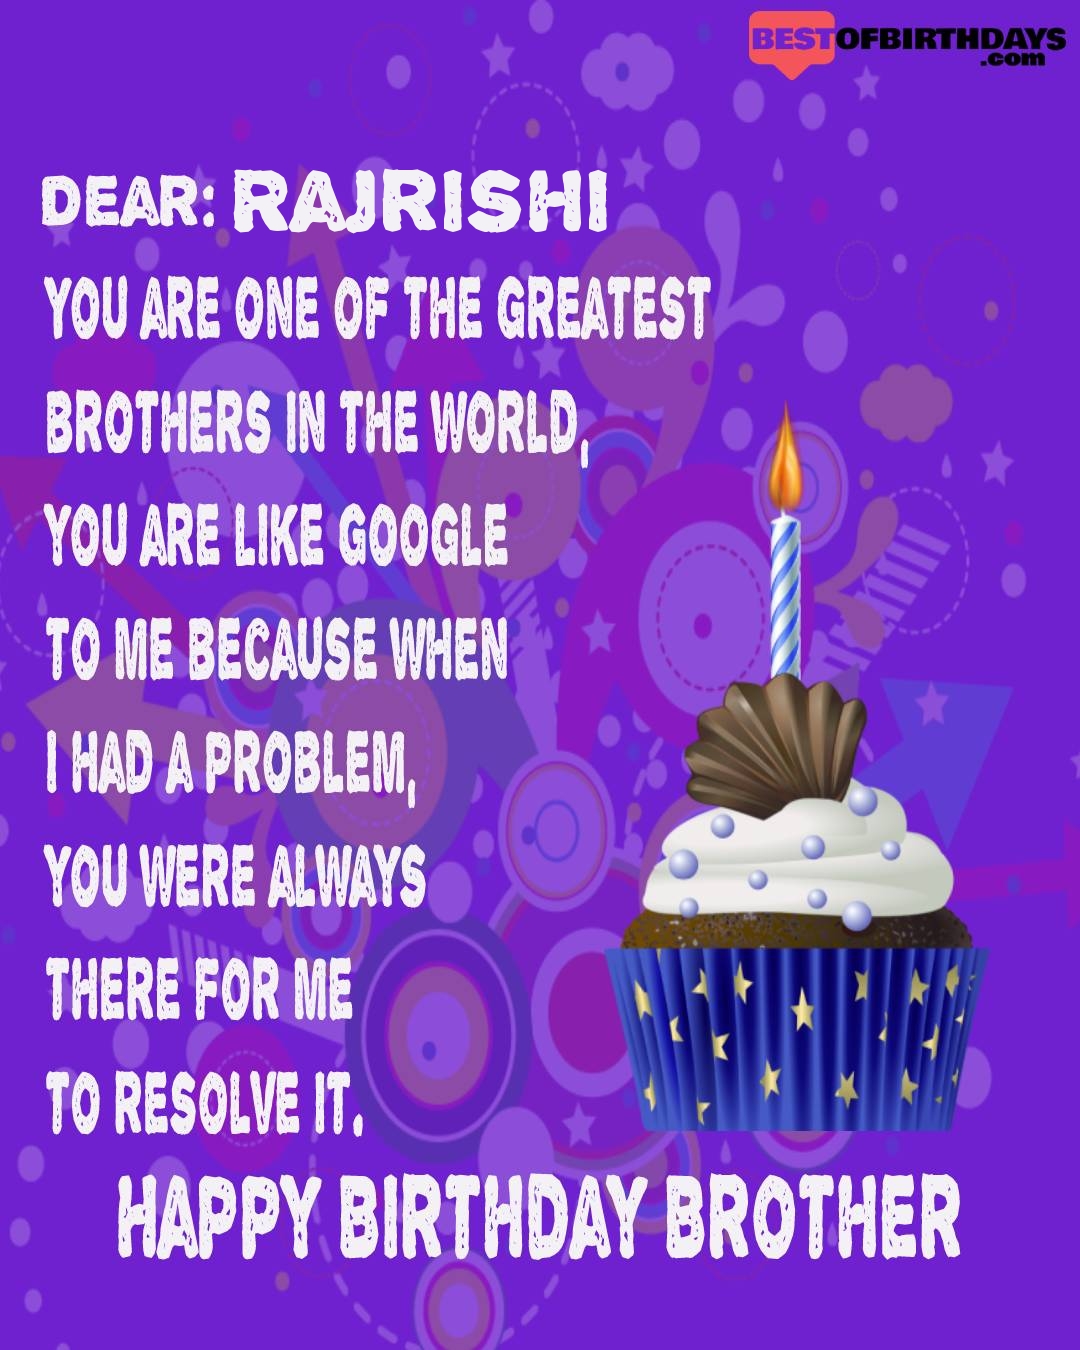 Happy birthday rajrishi bhai brother bro